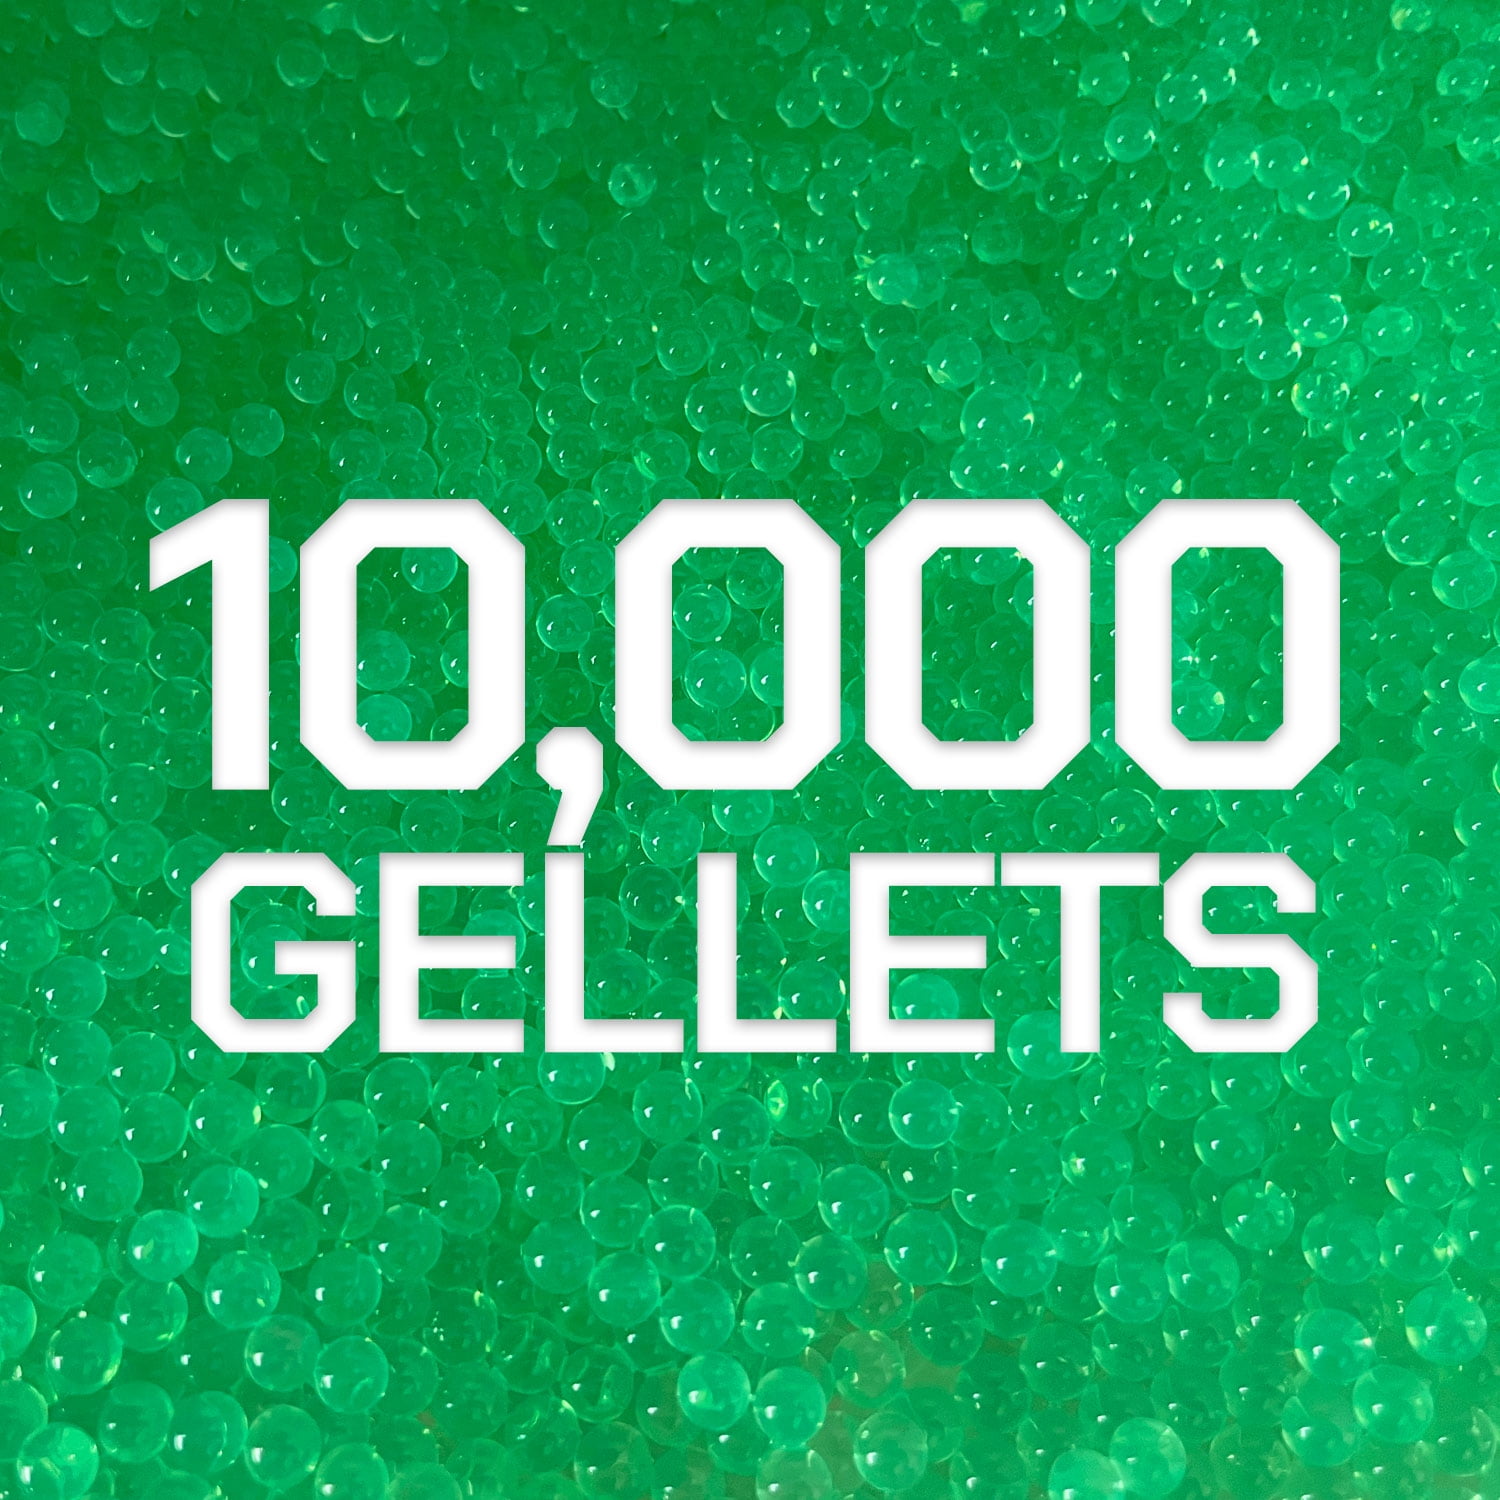 Gel Blaster Gellets, Electric Green Ammo Refill - Includes 10,000 Water-Based Gel Beads